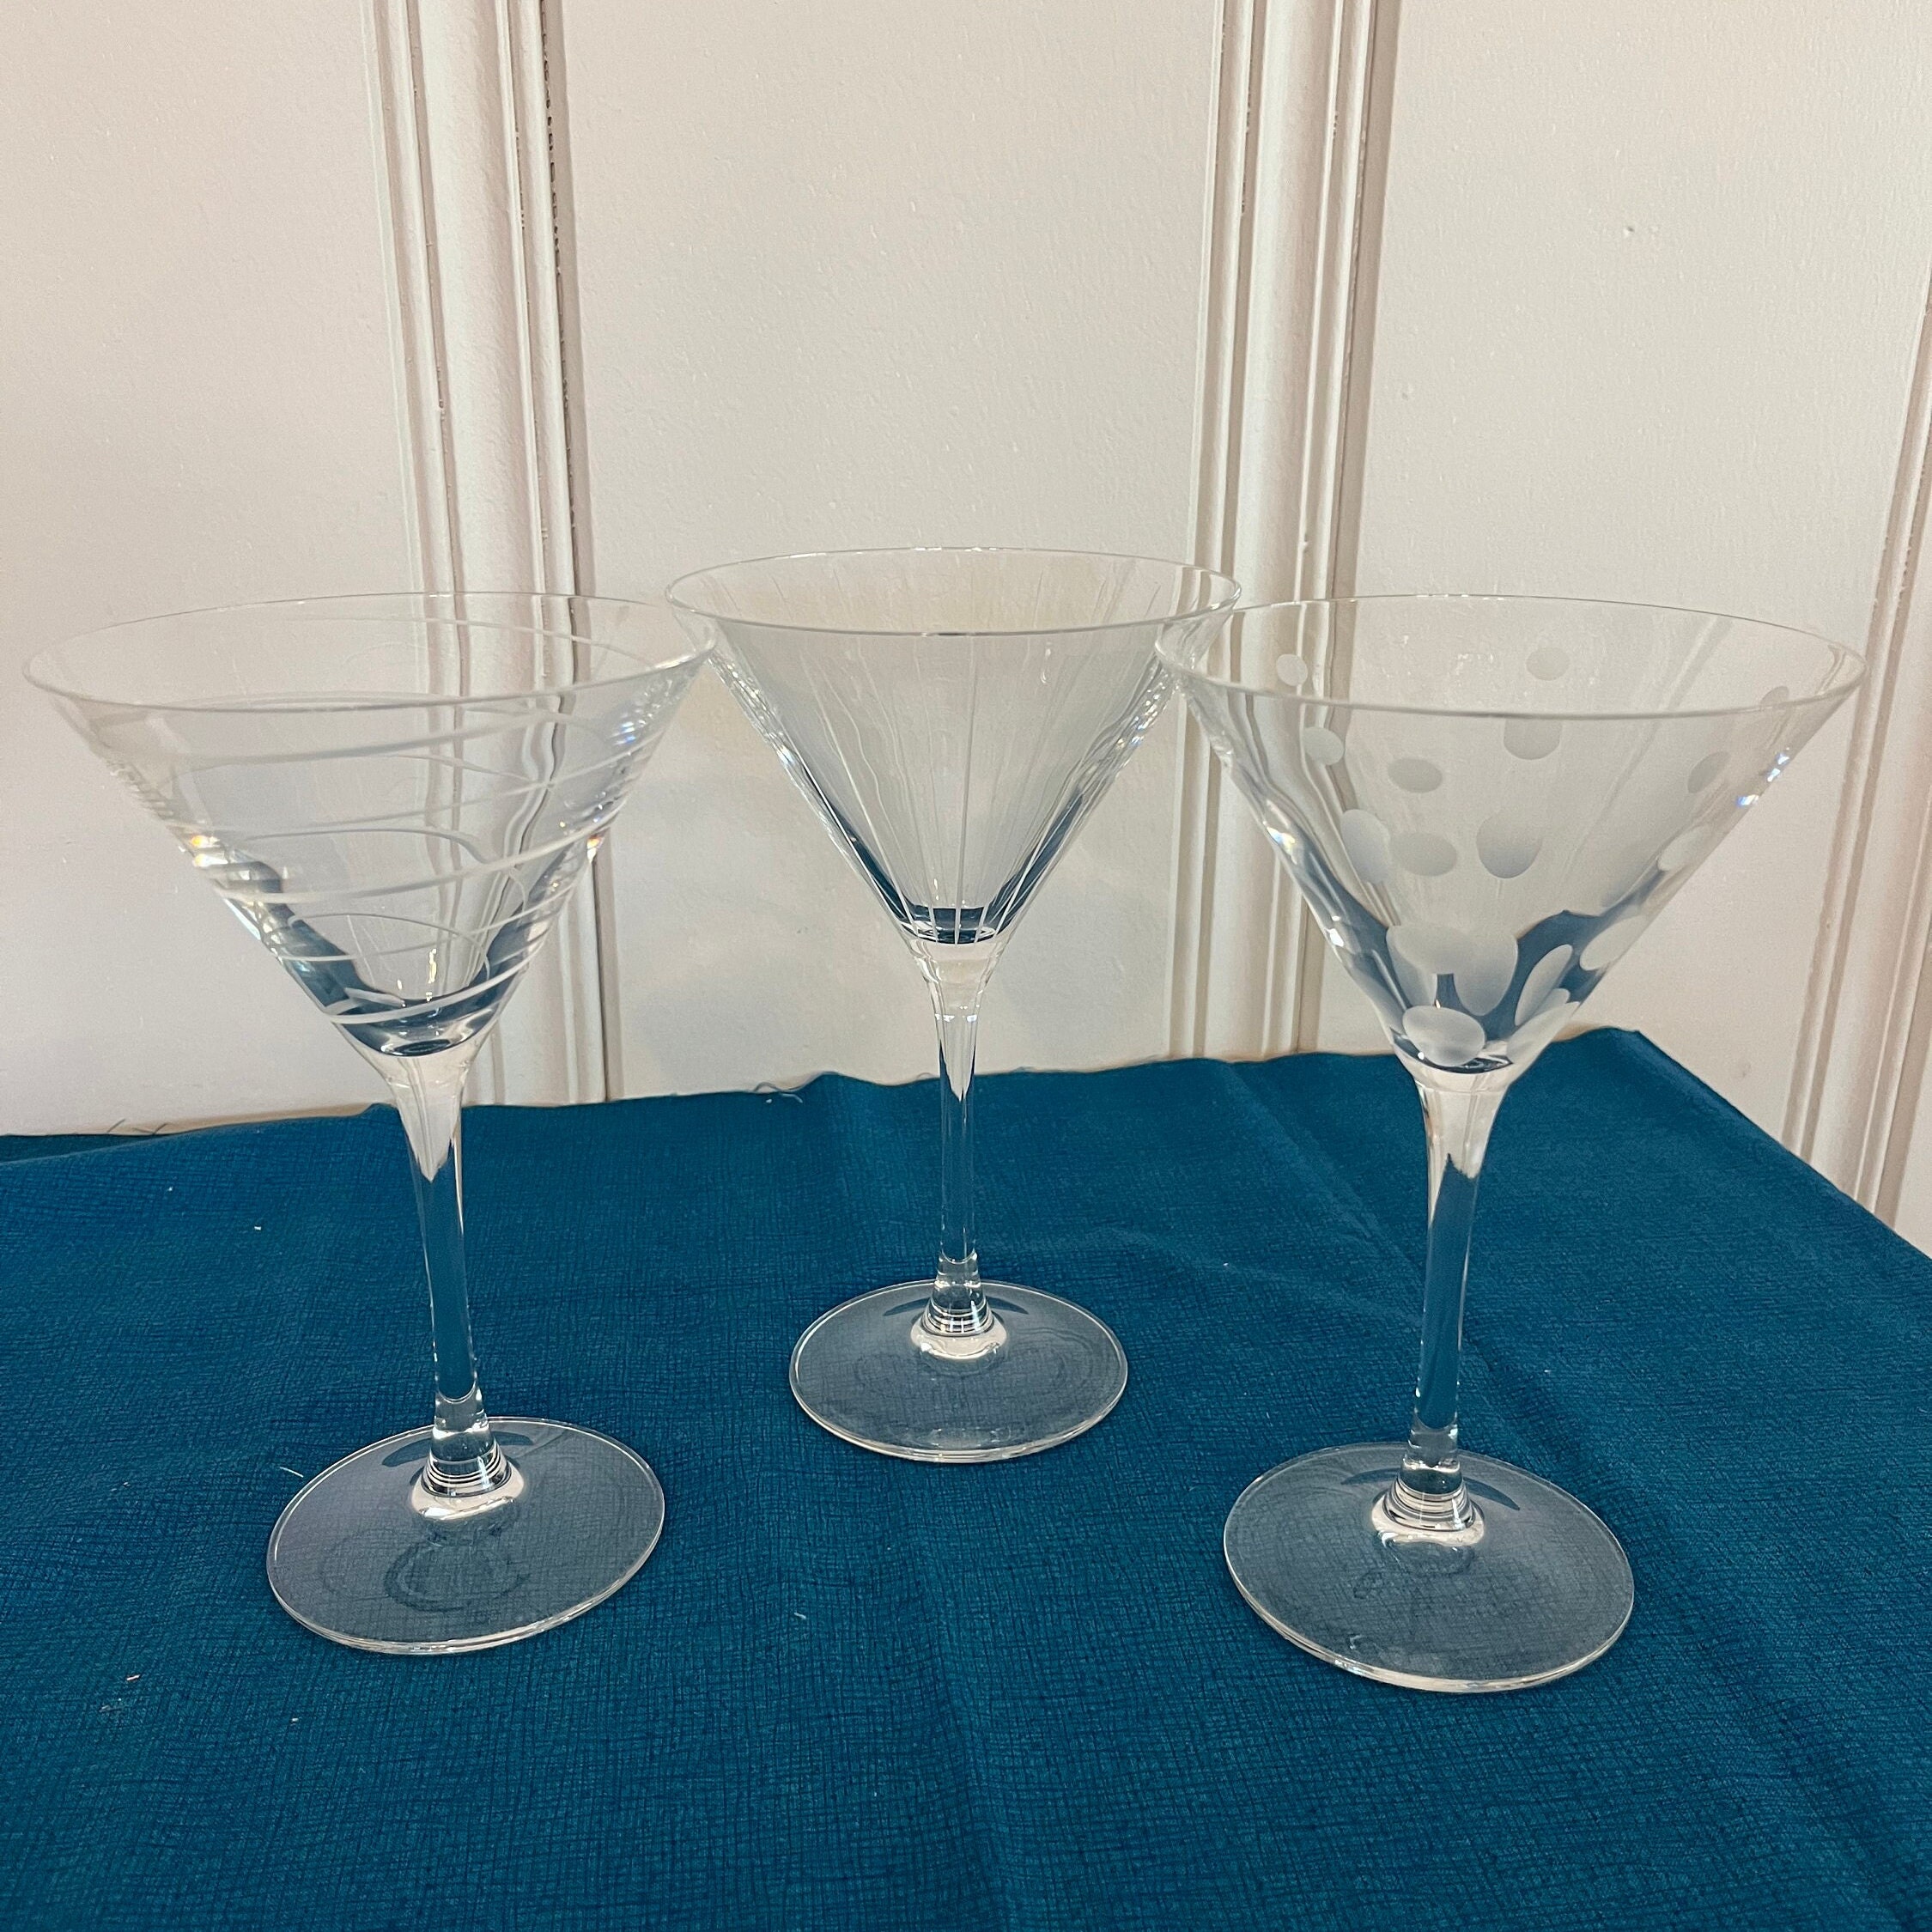 MIKASA Cheers Etched Polka Dot & Striped Festive Martini Glasses Set of 2 